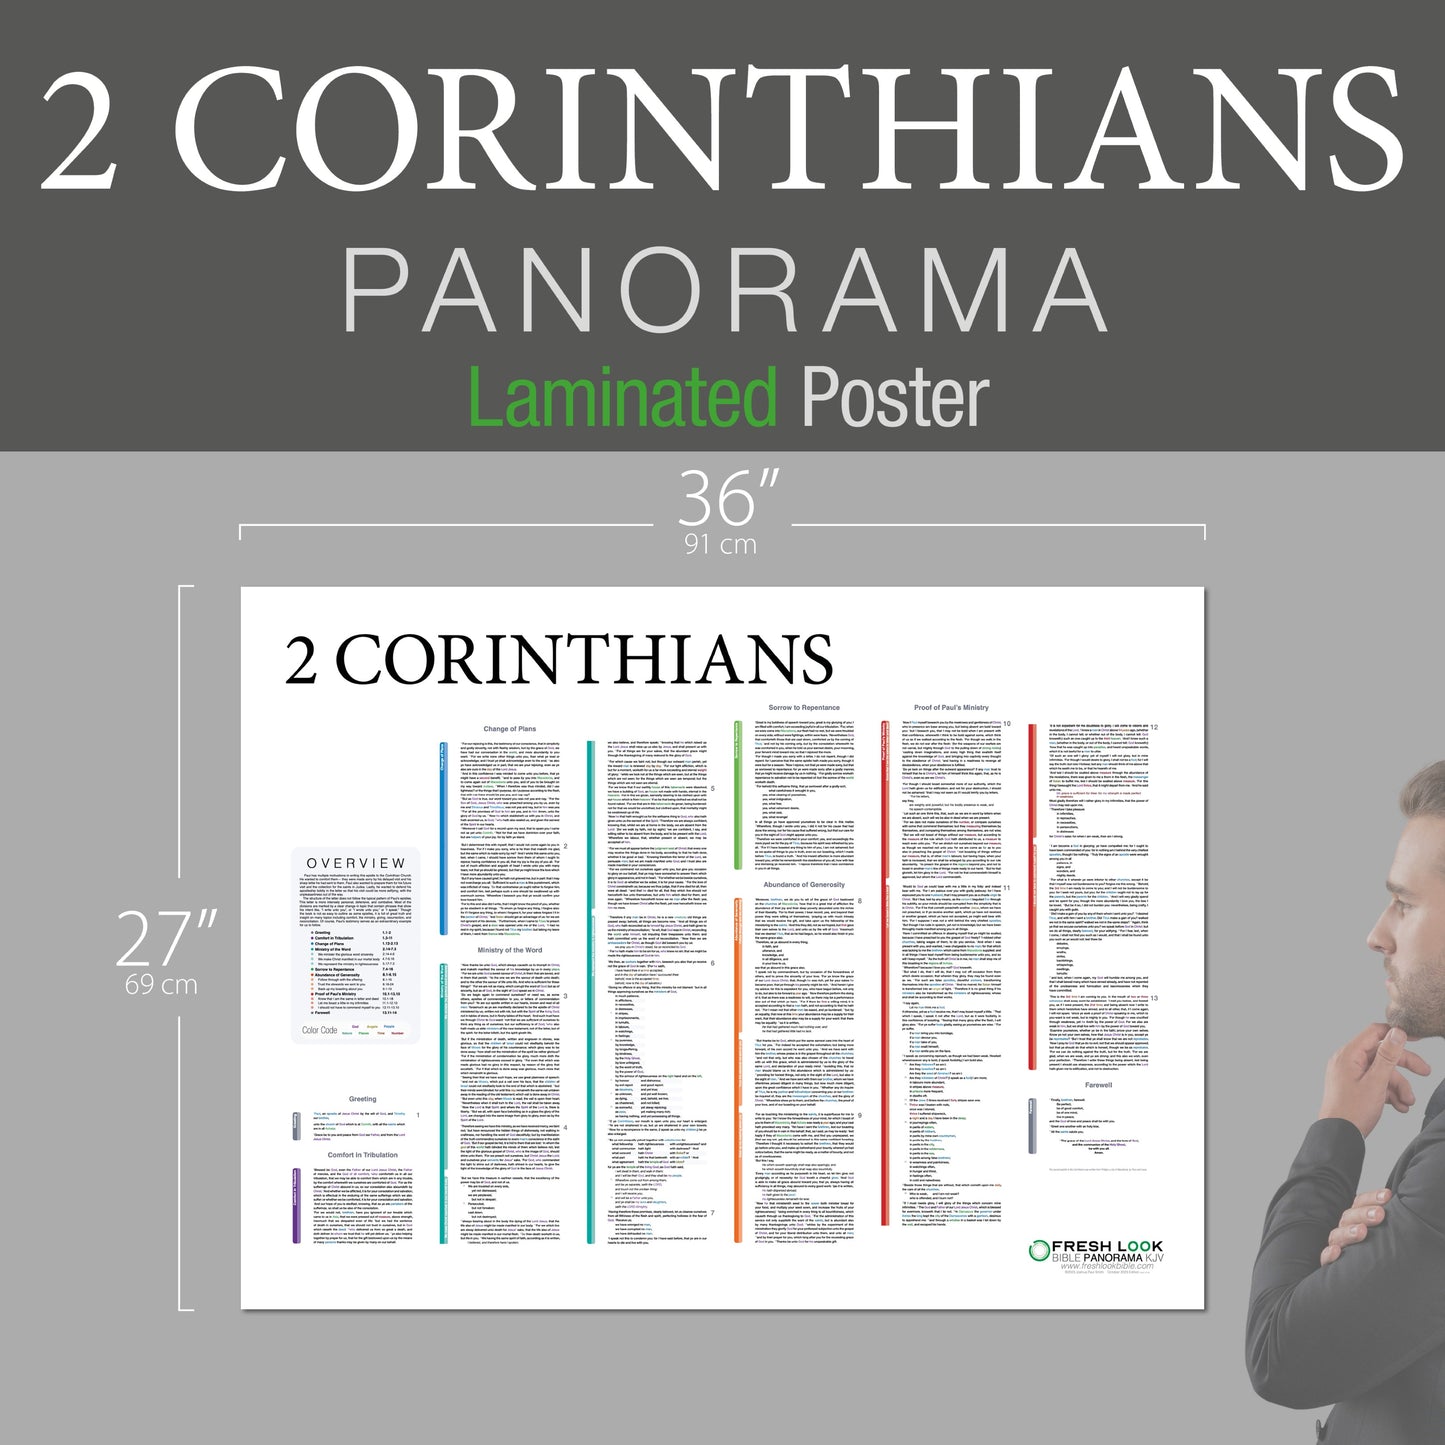 2 Corinthians Panorama Laminated